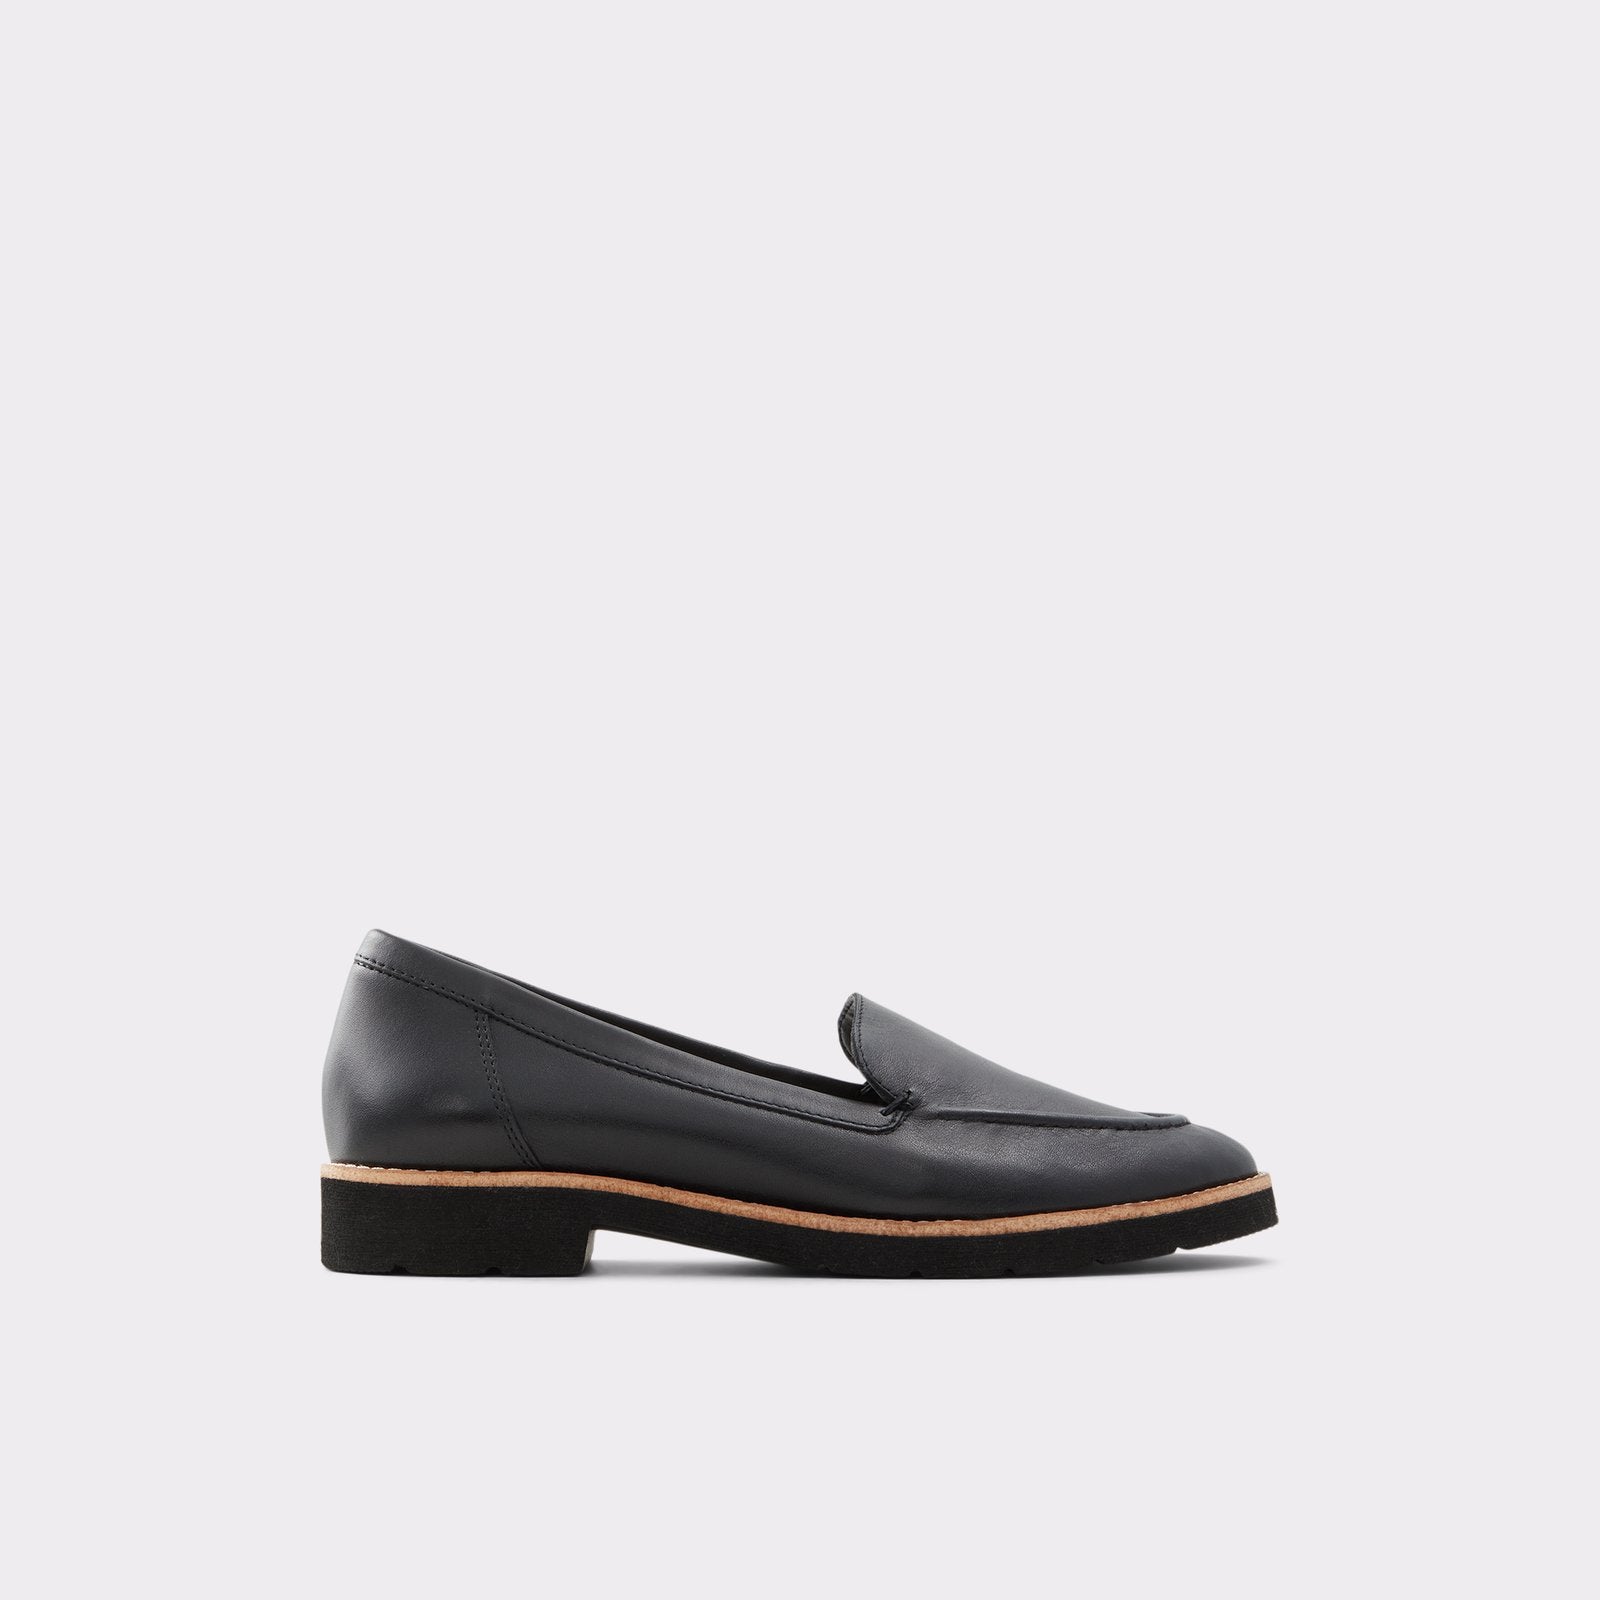 Rheildanflex / Slip Ons Women Shoes - Black - ALDO KSA